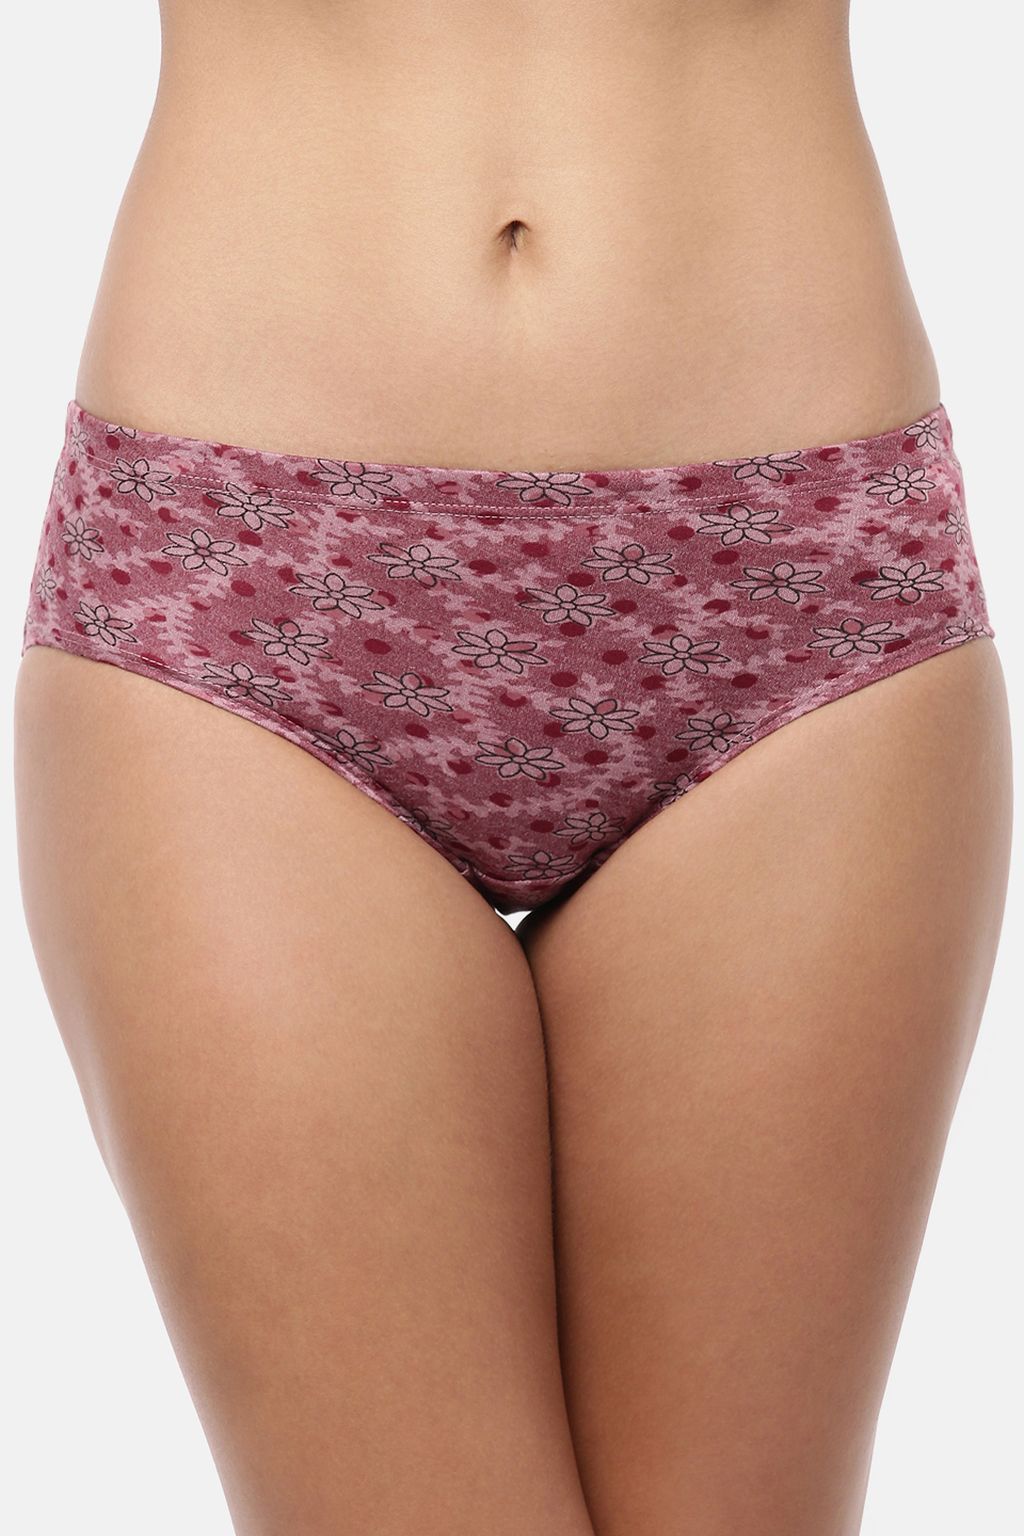 599 - Hipster Panties for Women - Inner Elastic Panty - Pack of 3